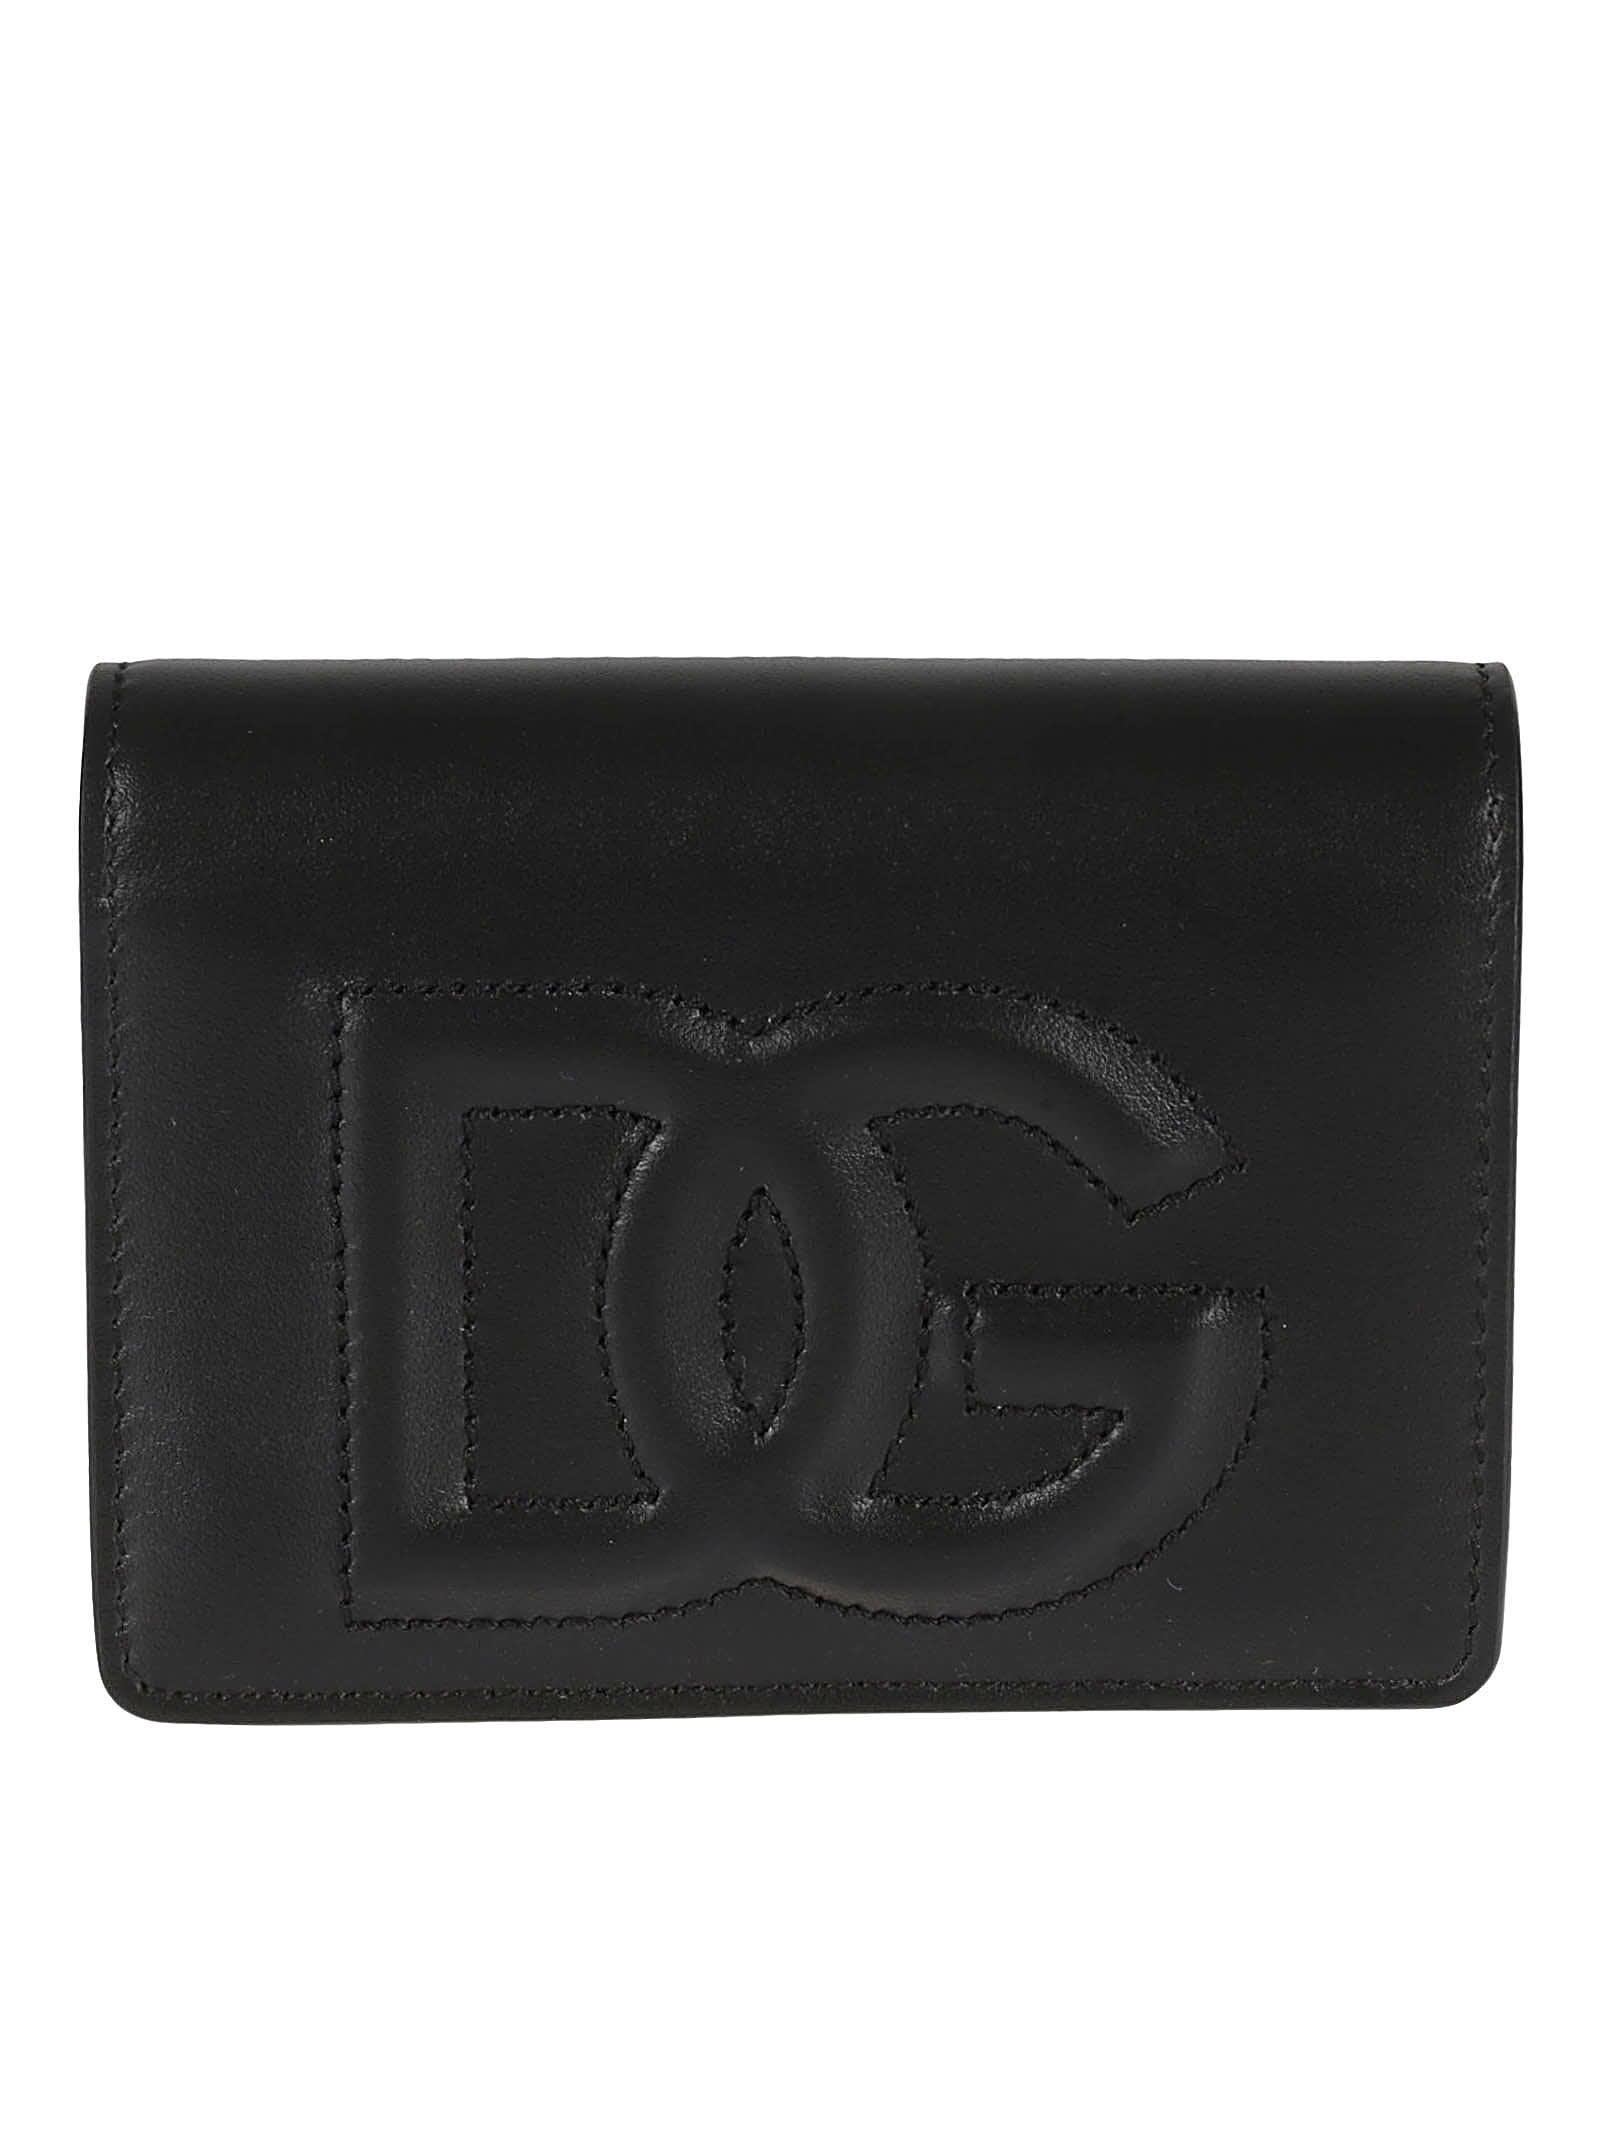 Dolce & Gabbana Embossed Logo Wallet